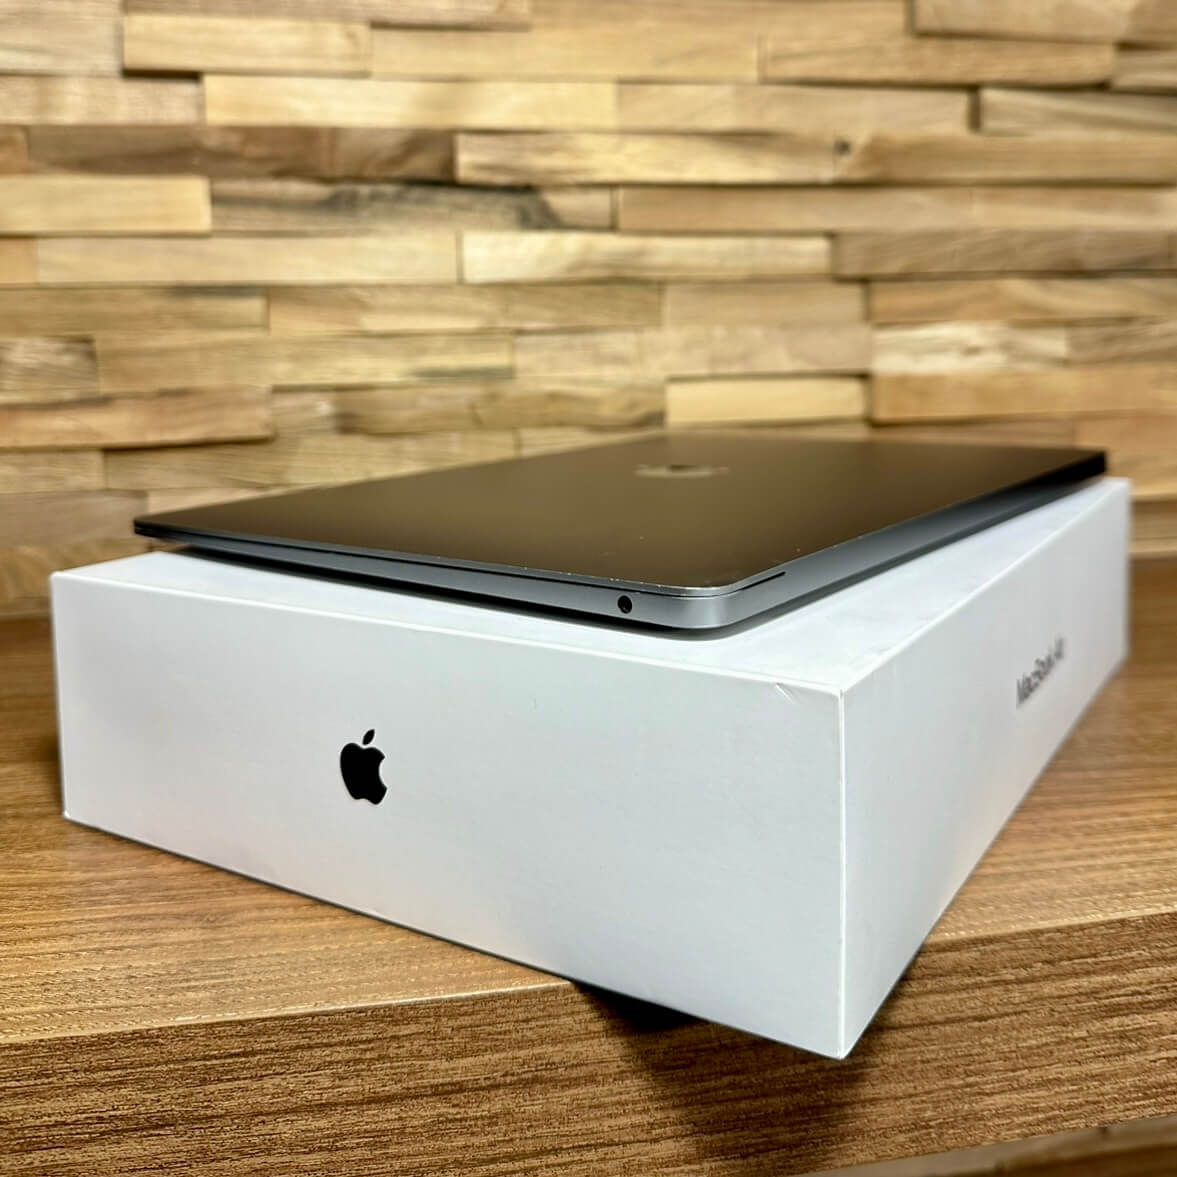 MacBook Air 13¨ Space Gray, i5, rok 2019, 8GB RAM, 128GB SSD